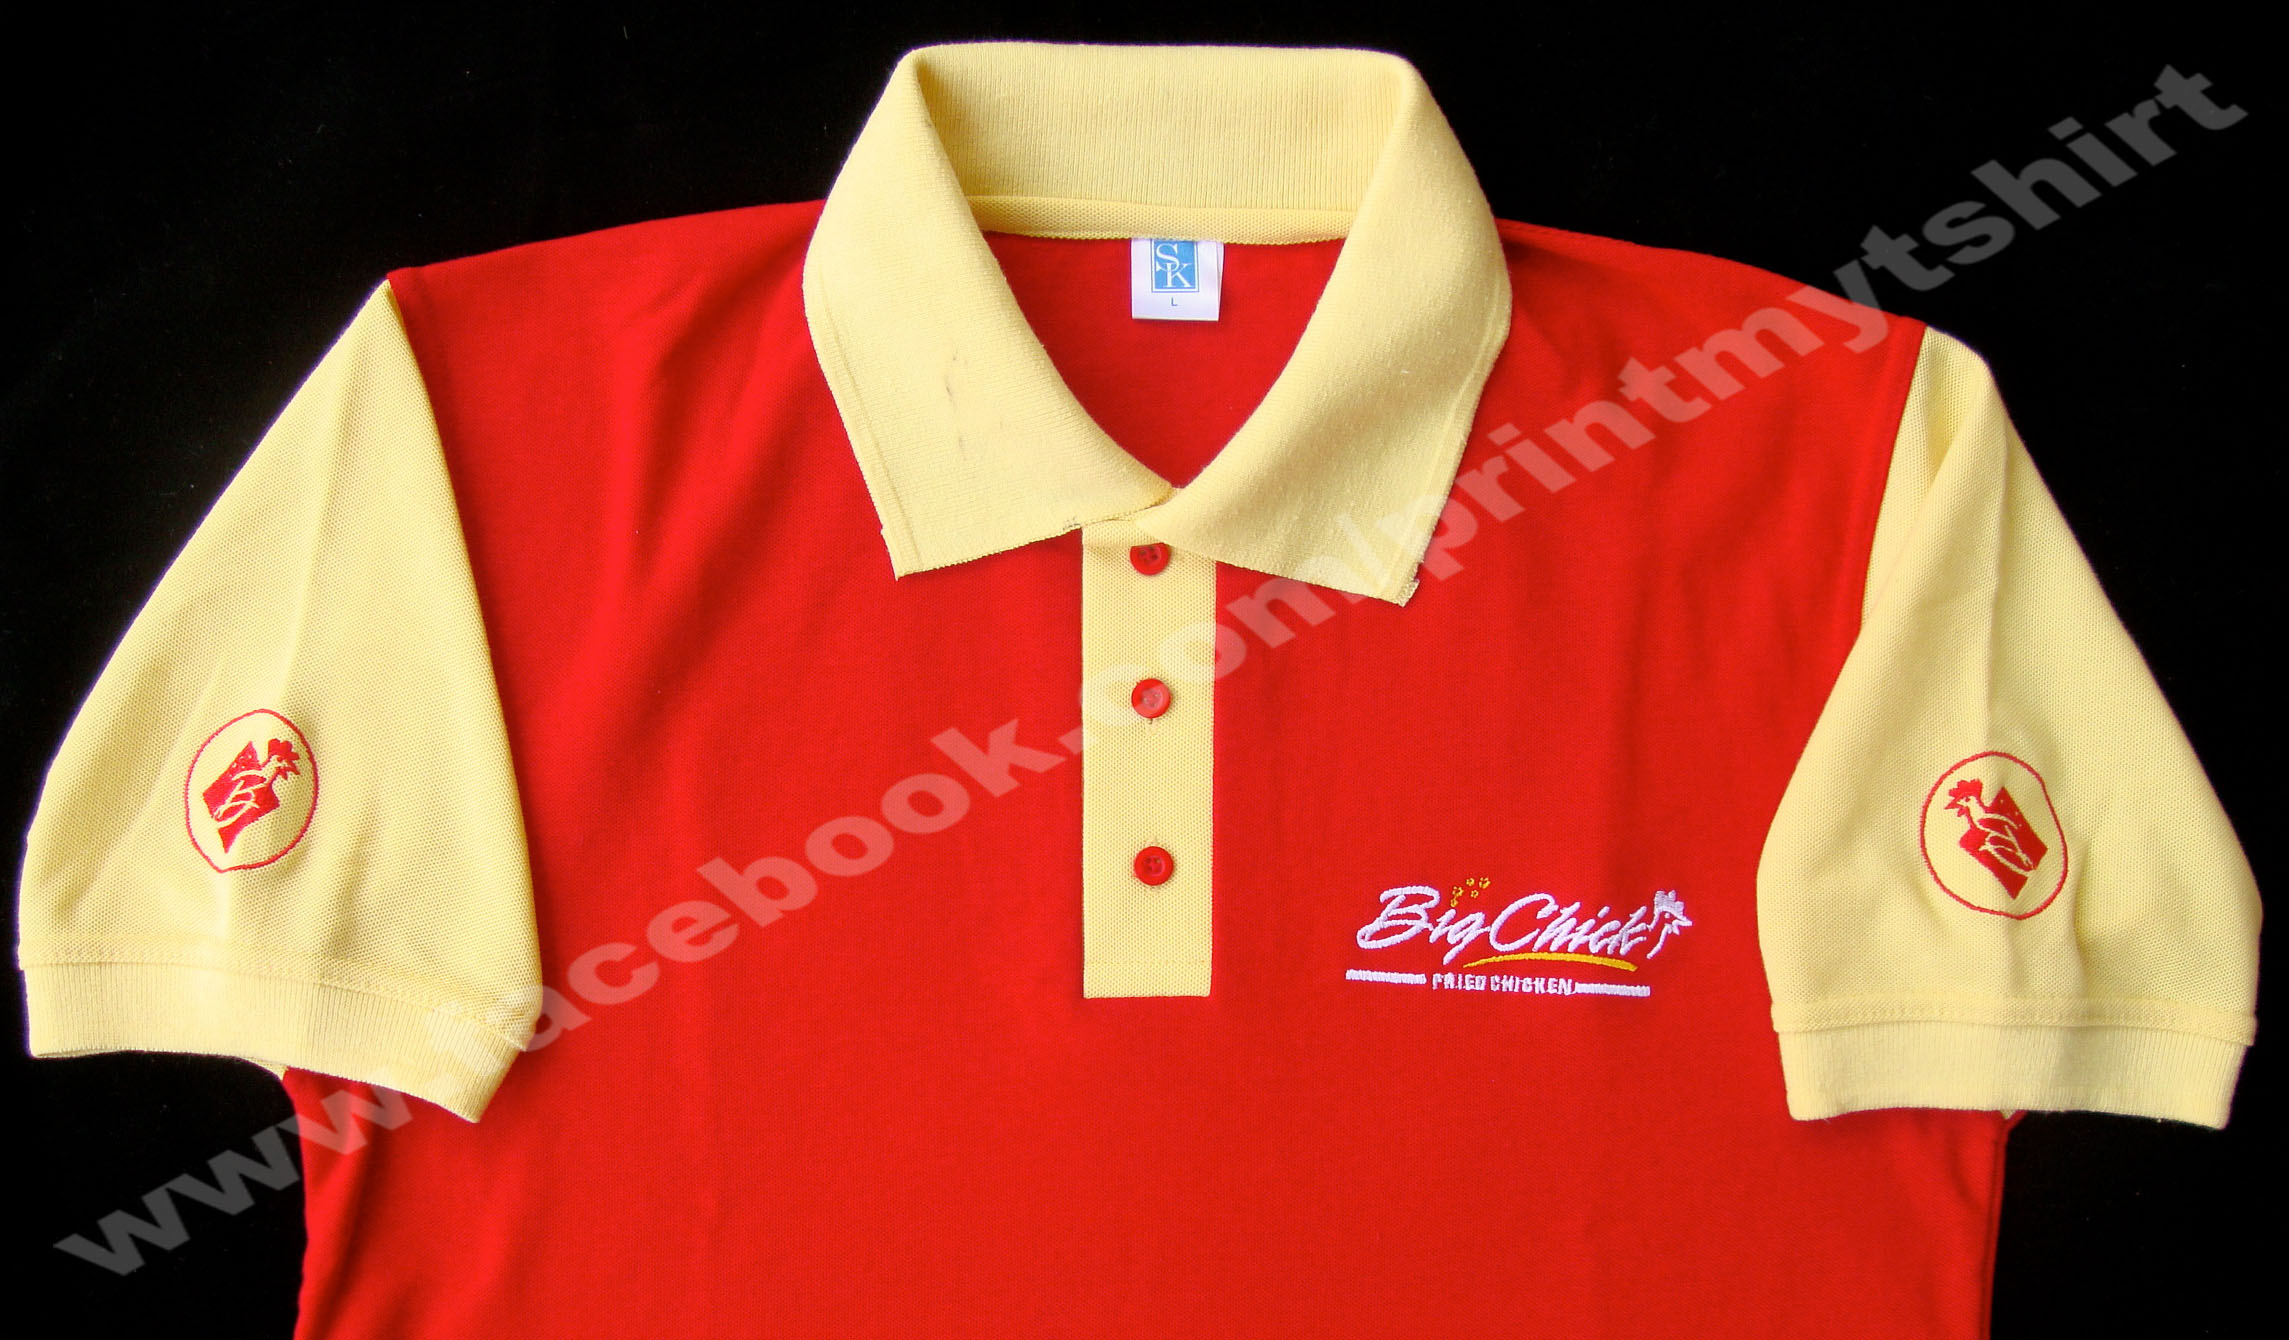 Hotel uniform t.shirt manufacturer Chennai, Sk-tshirts